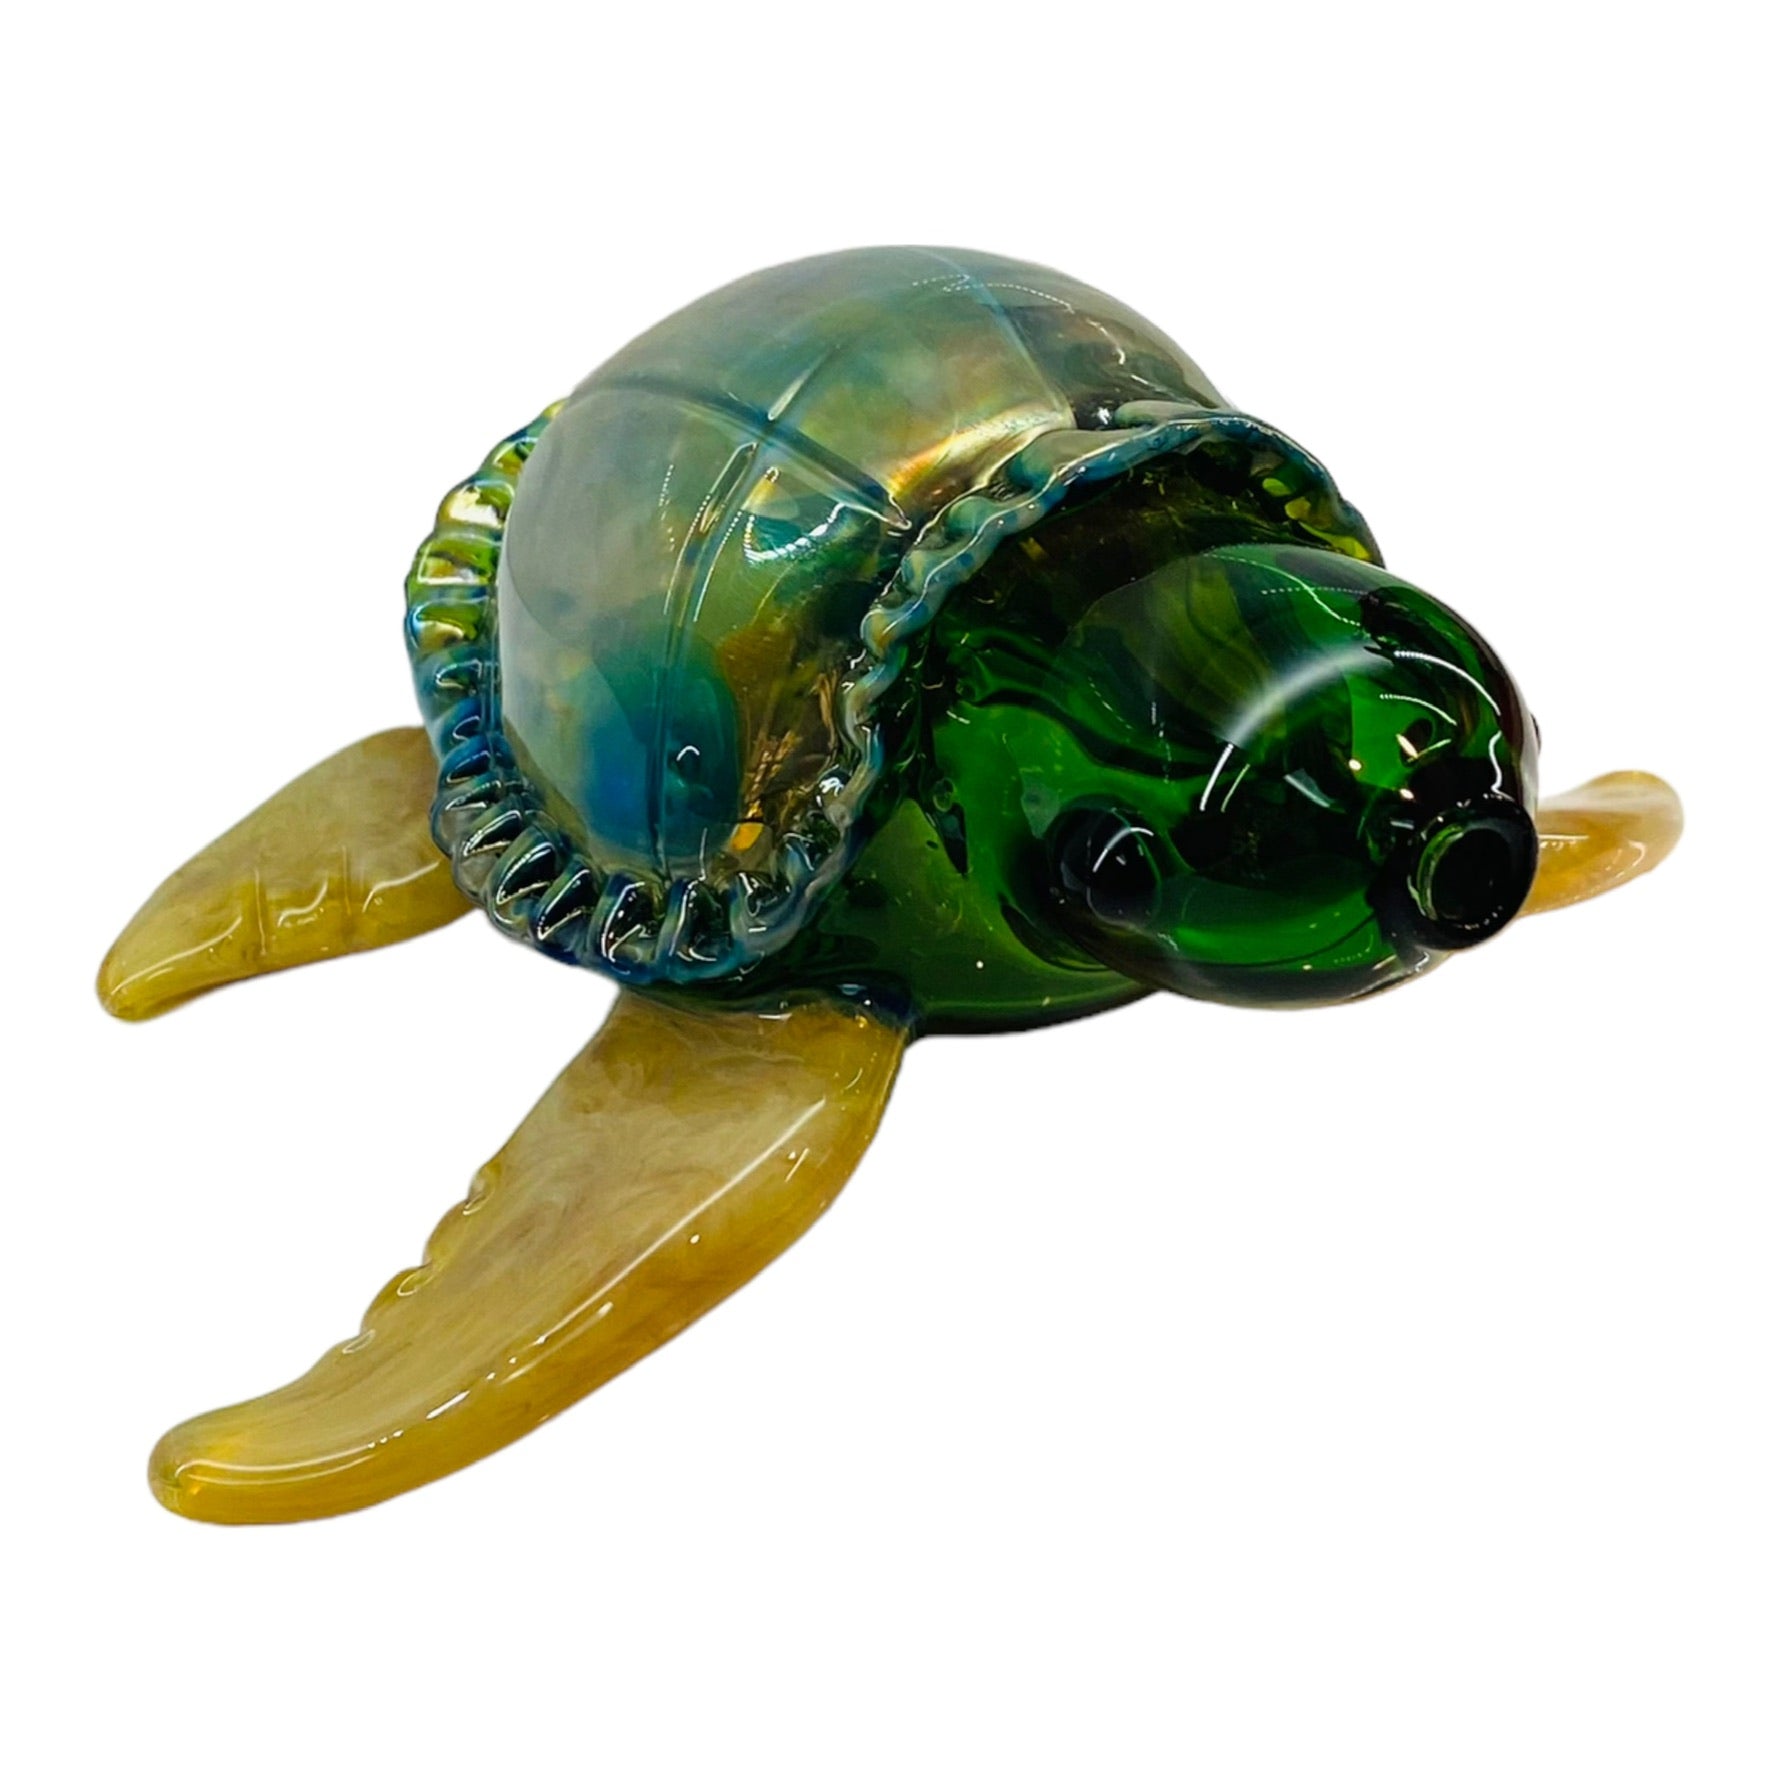 Daniels Glass Art - Glass Sea Turtle Smoking Hand Pipe